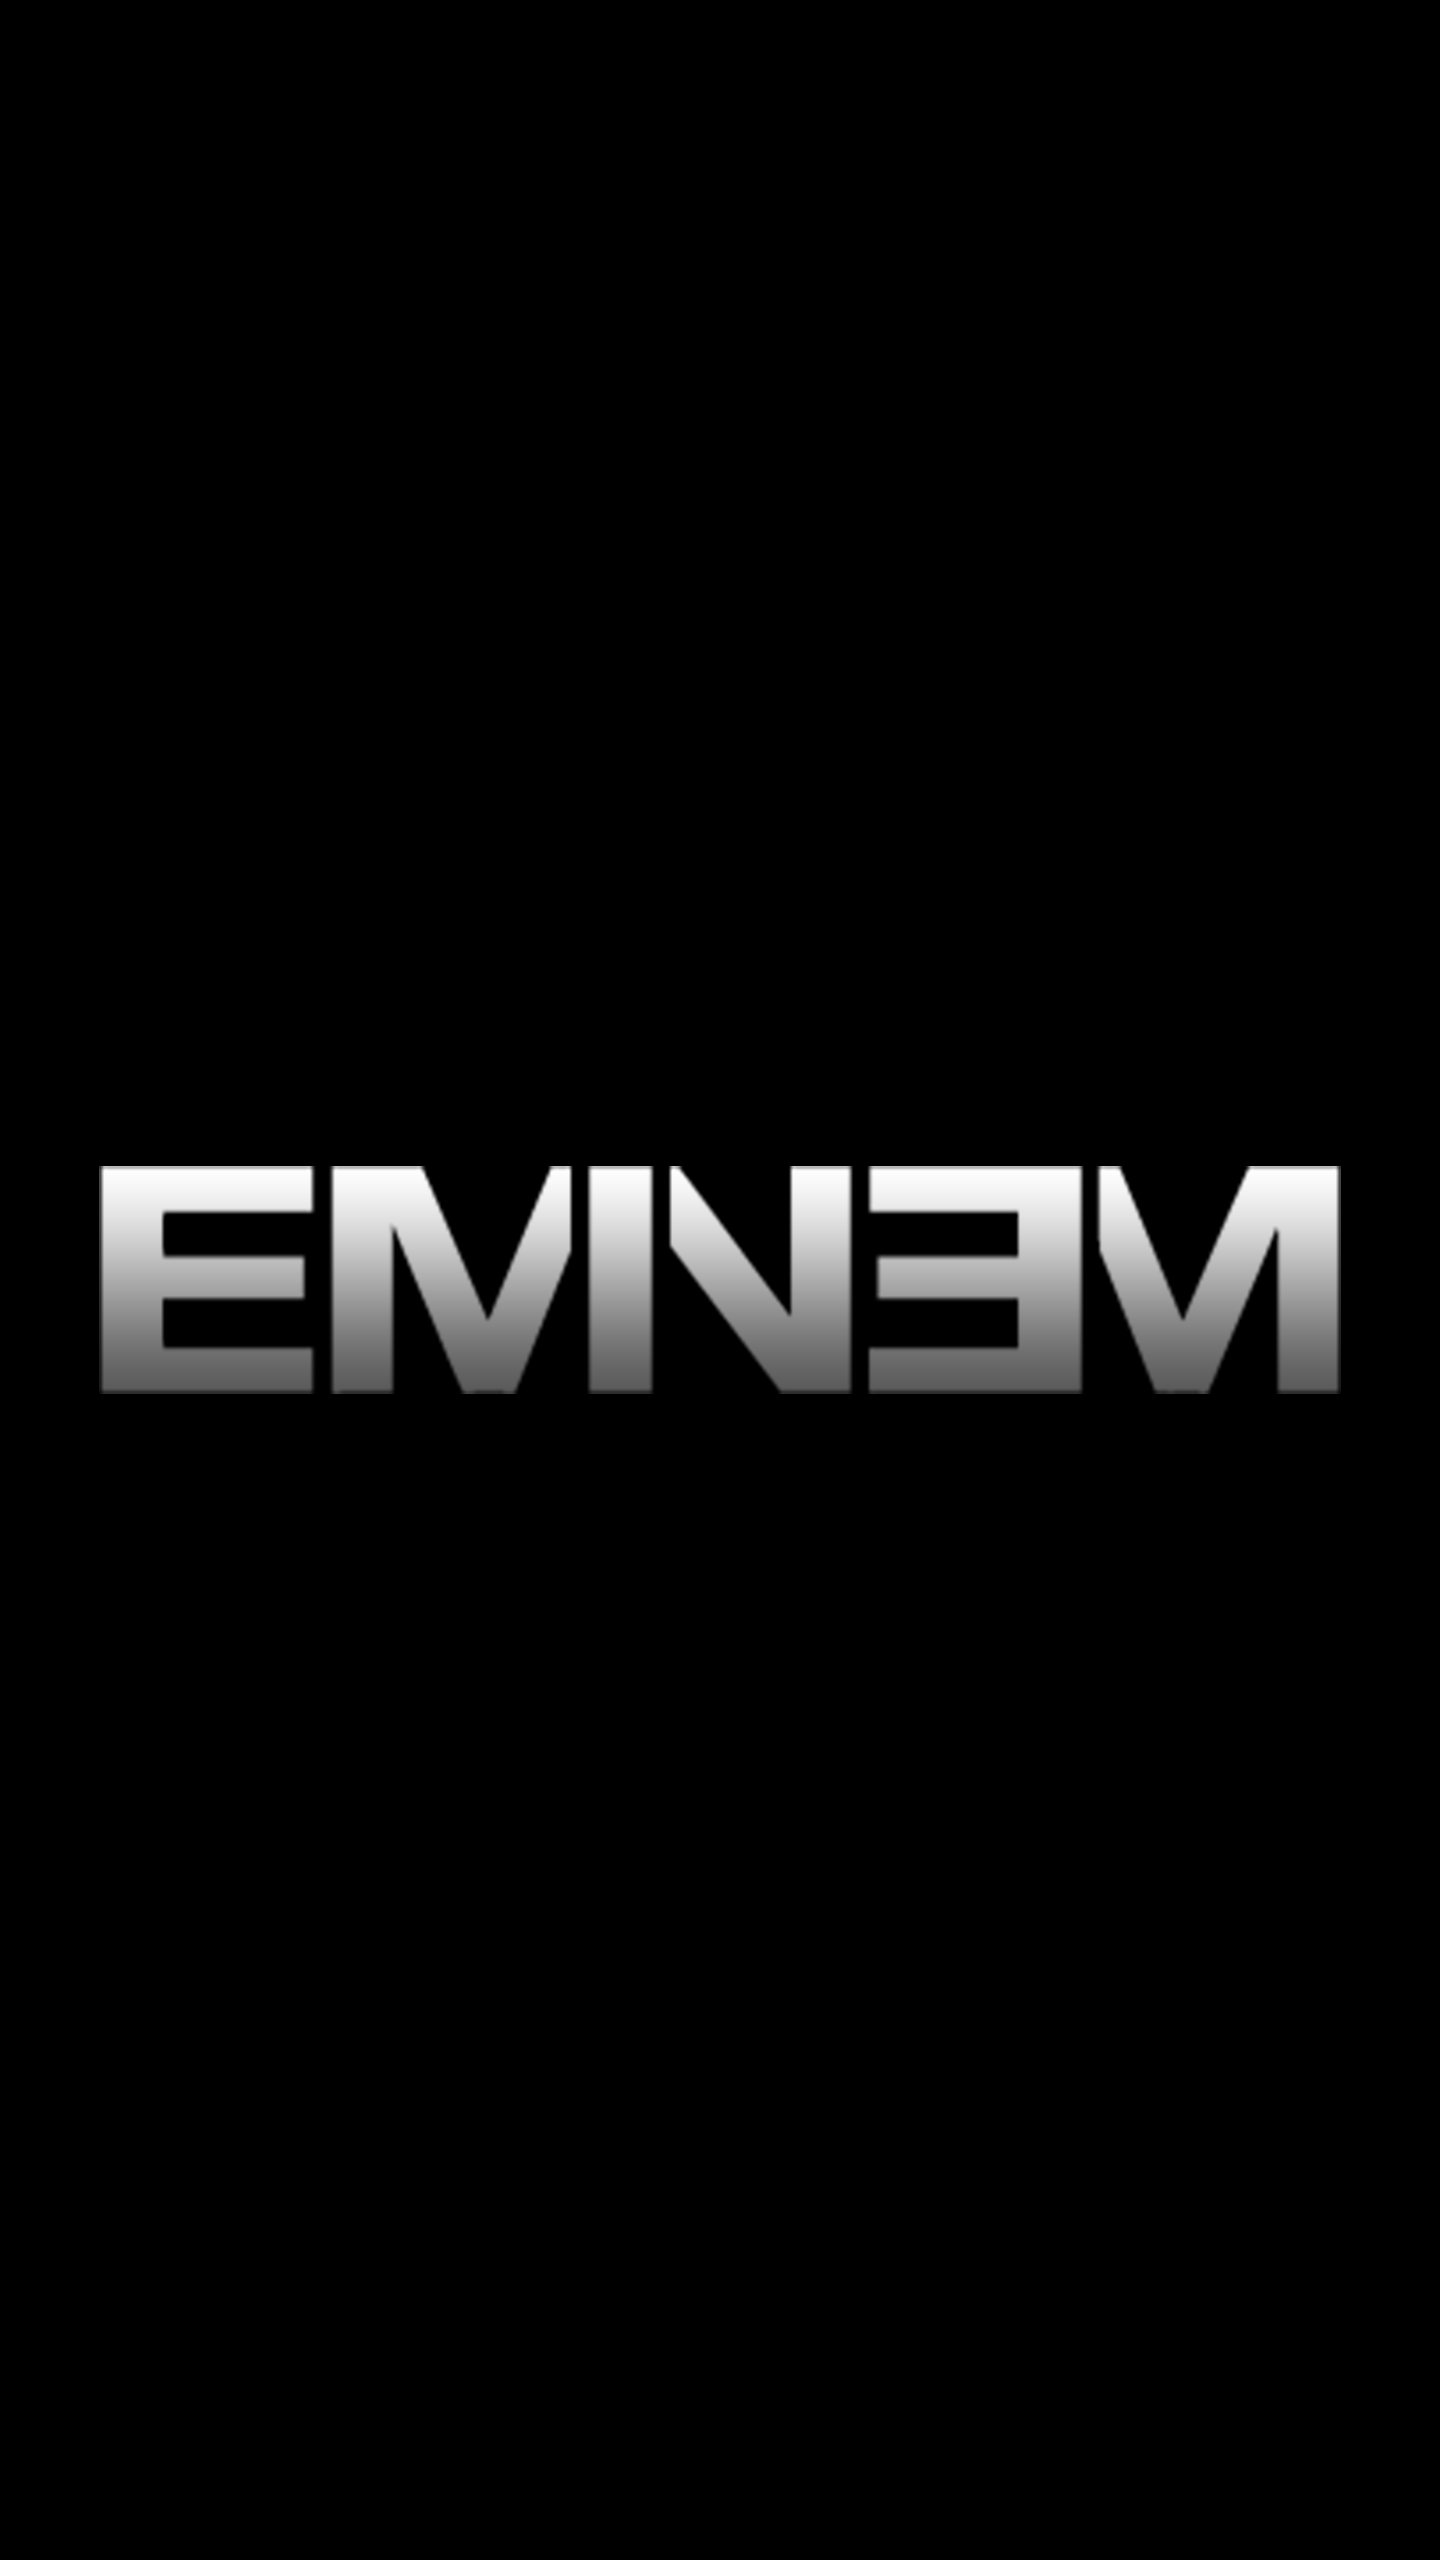 Eminem Logo Amoled Wallpaper